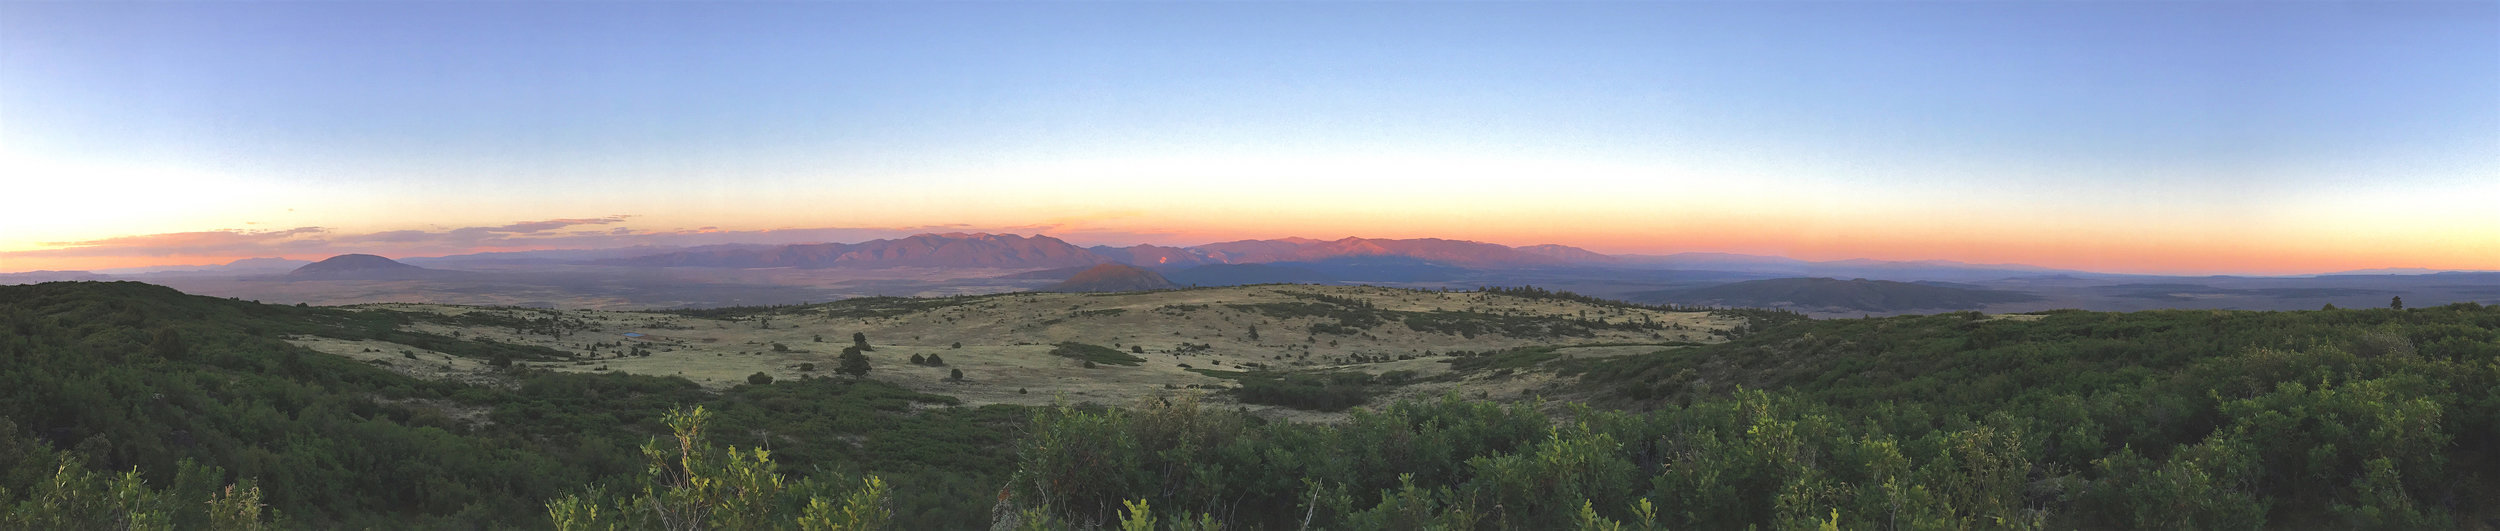 Sunset+Landscape+Panorama+-+Pot+Mtn.jpg